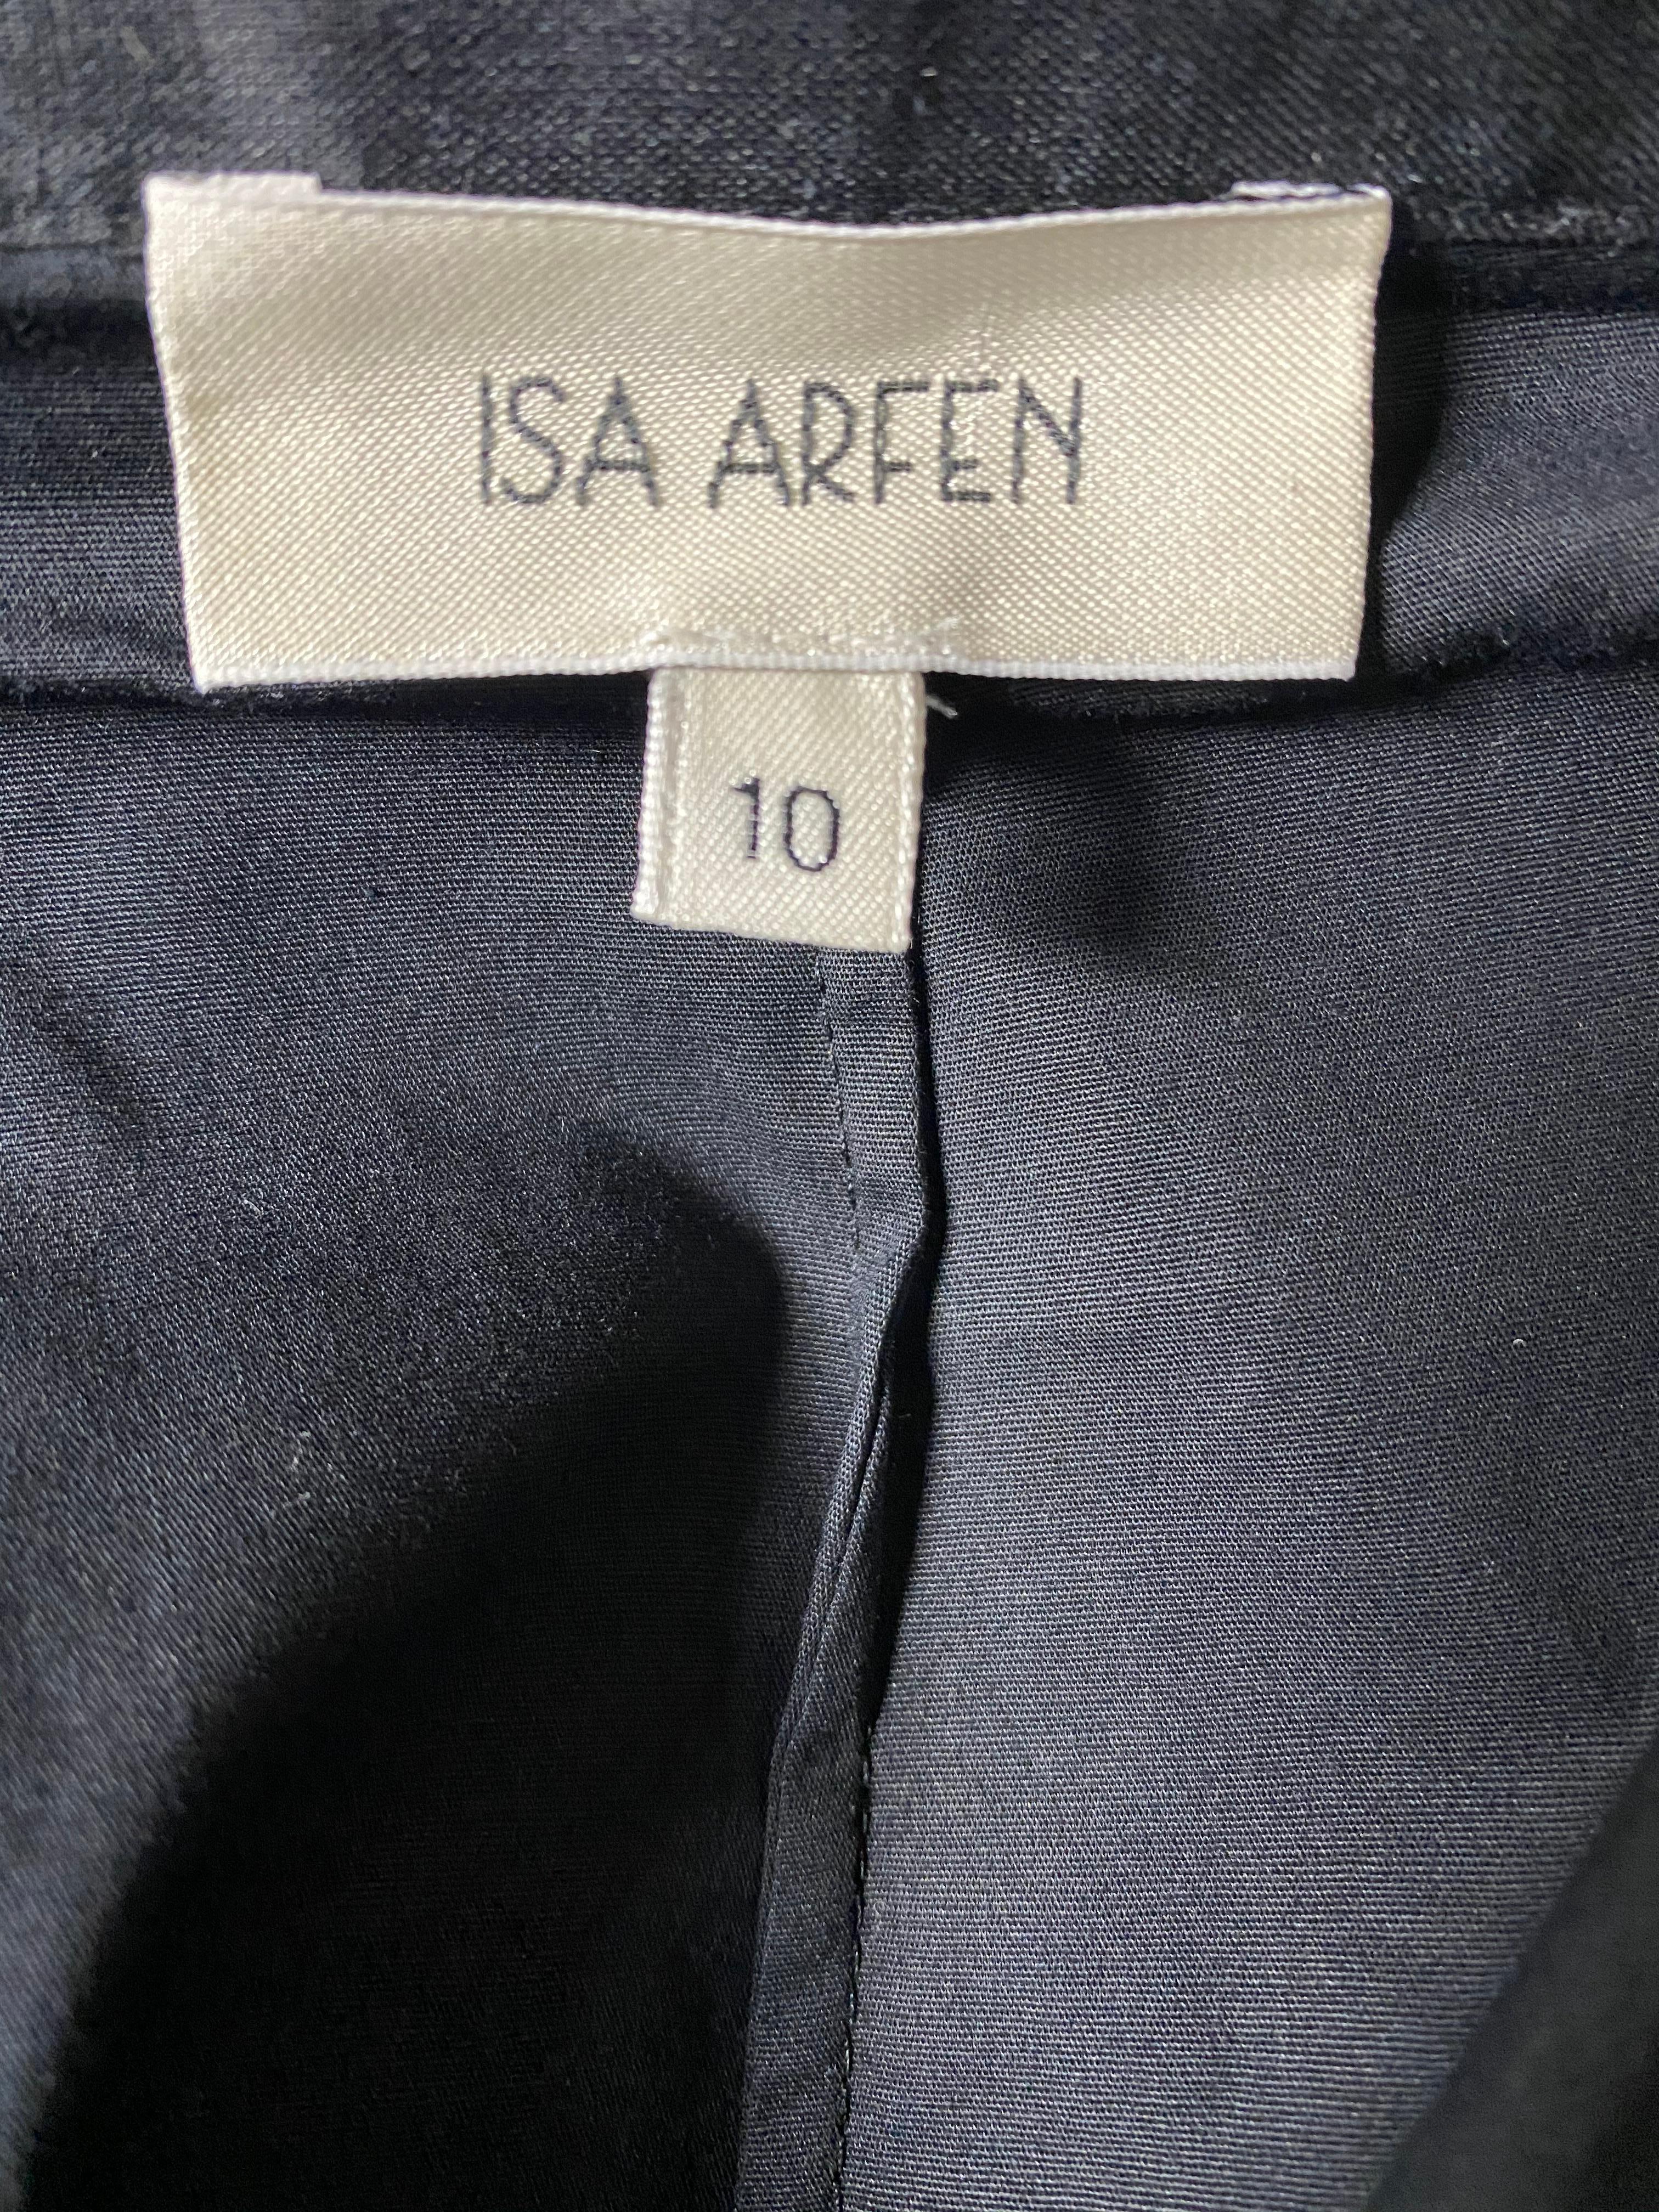 Isa Arfen Black Ruffle Maxi Skirt Size 10 For Sale 8